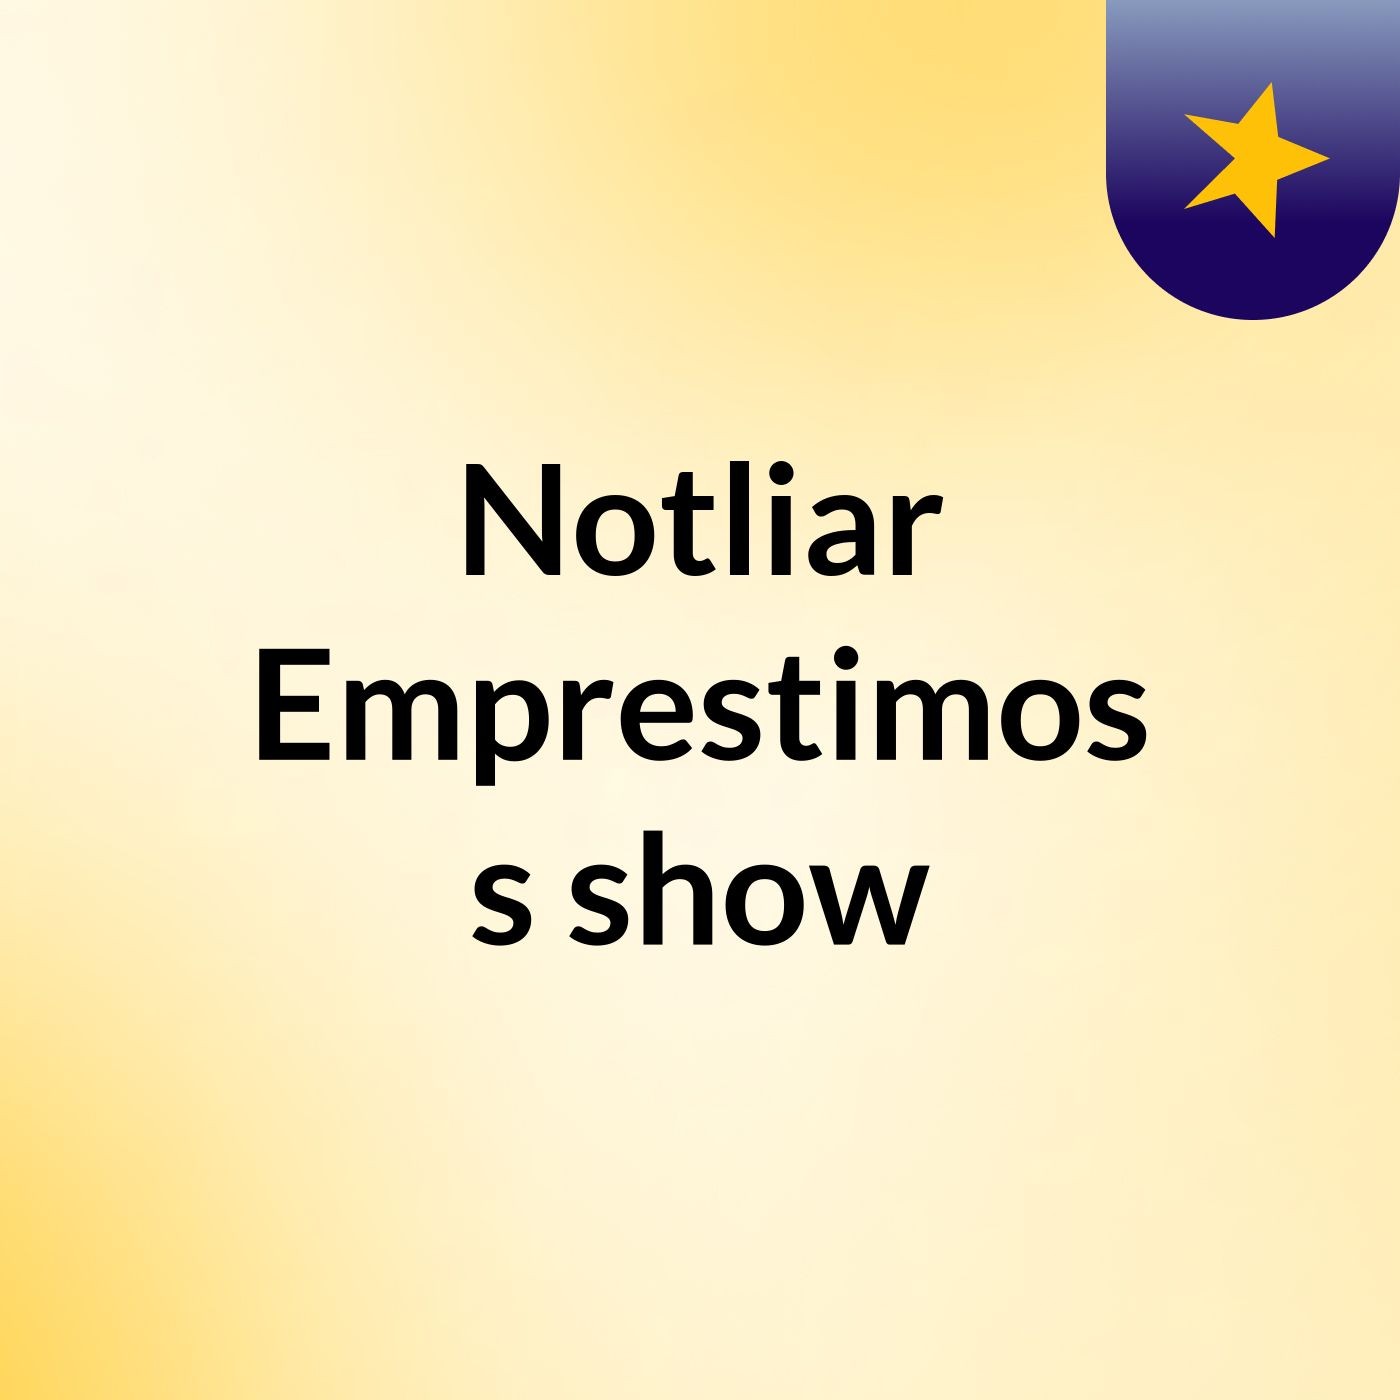 Notliar Emprestimos's show